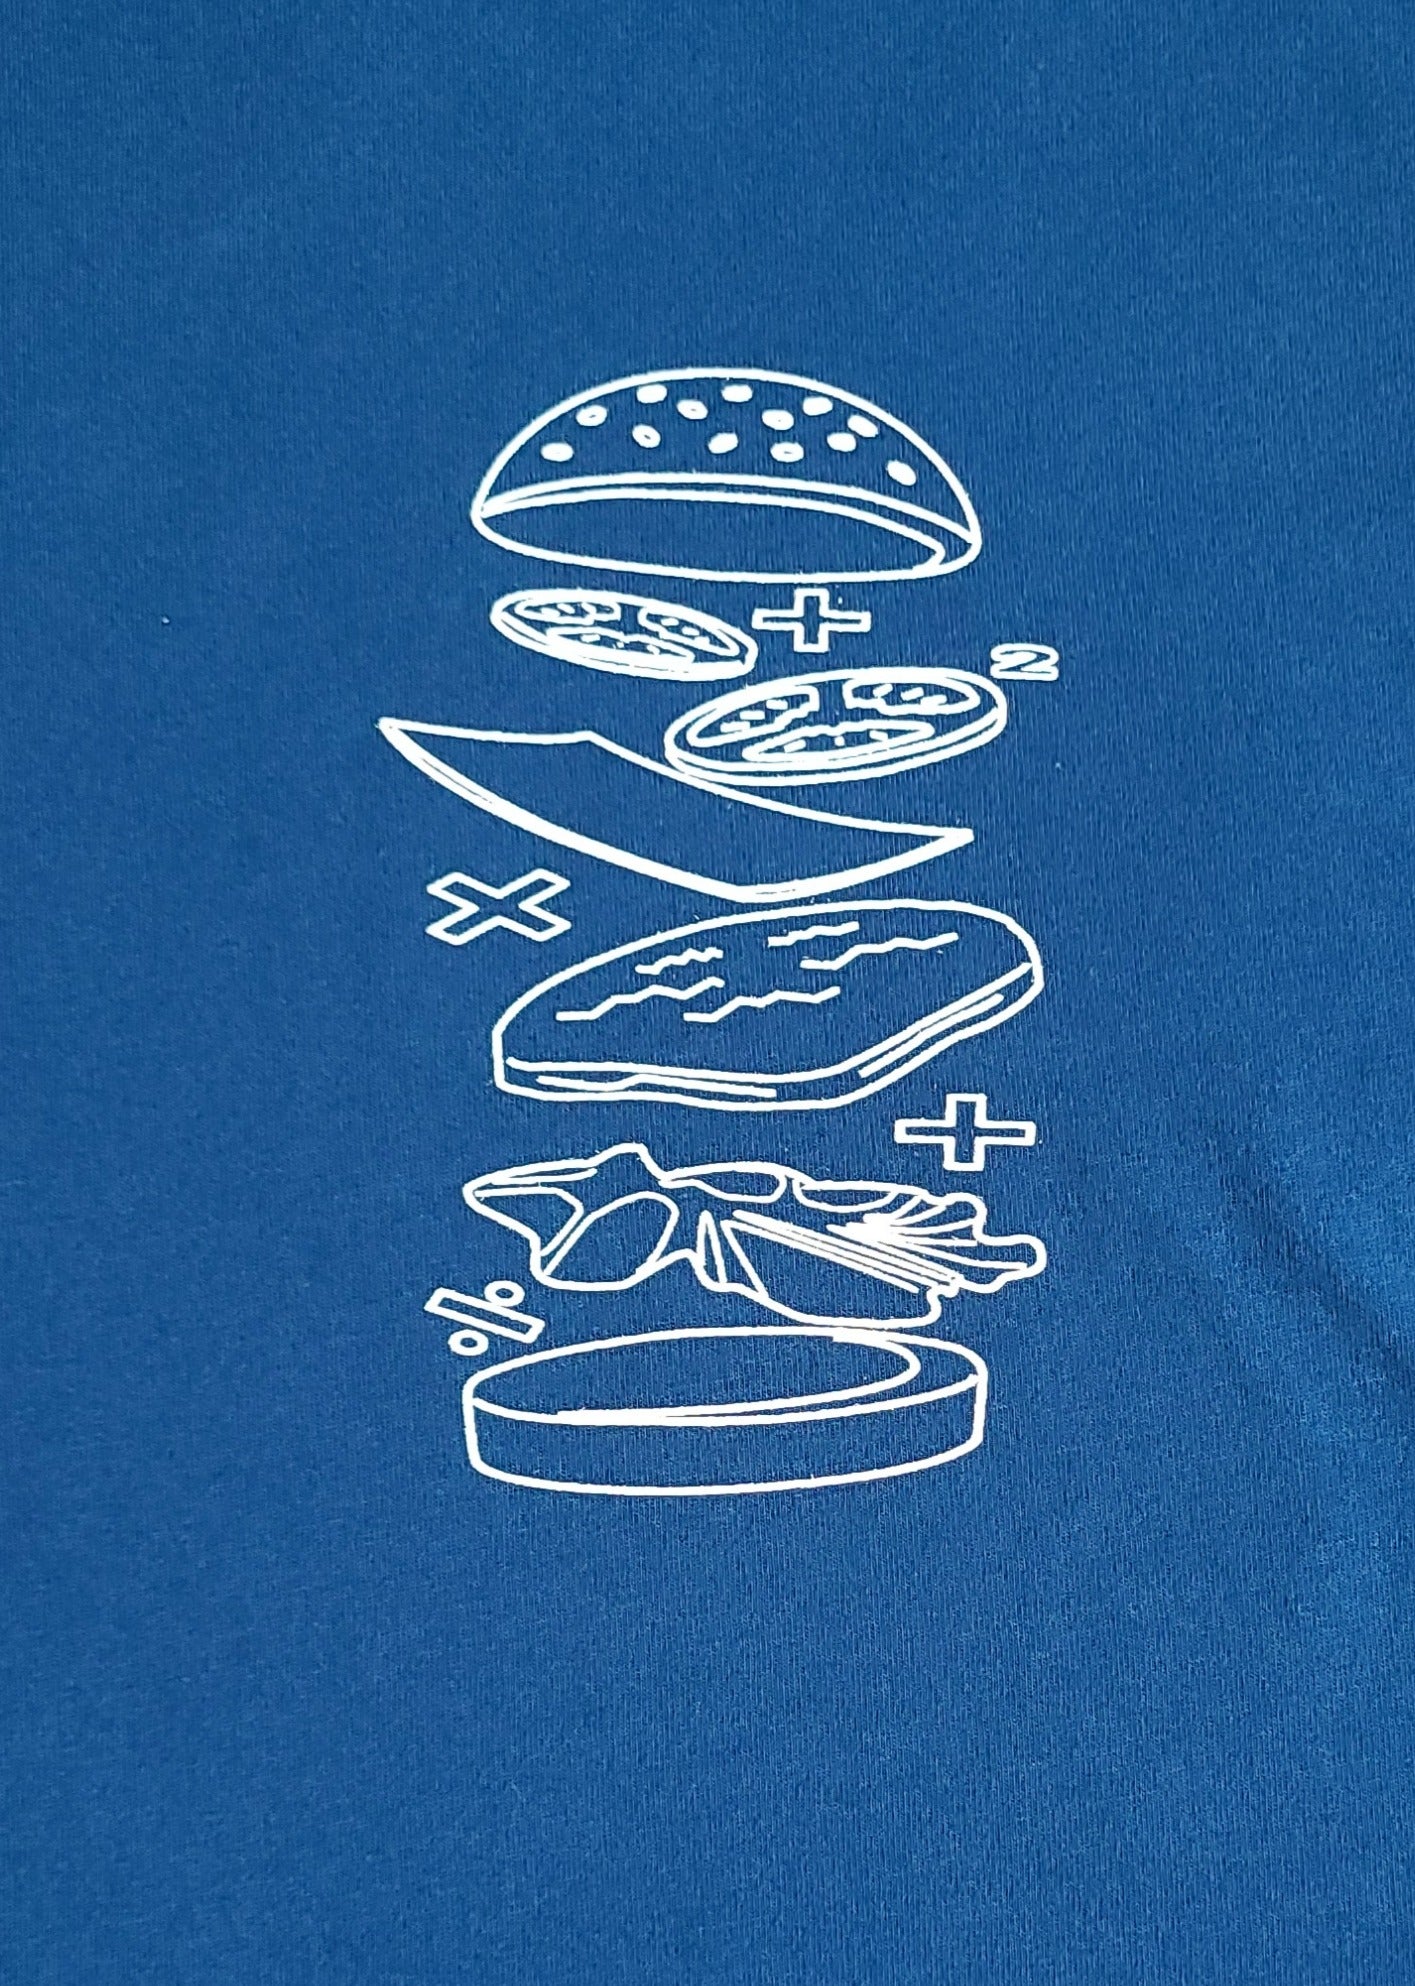 Simple Stainz - Hamburger Math Unisex T-Shirt